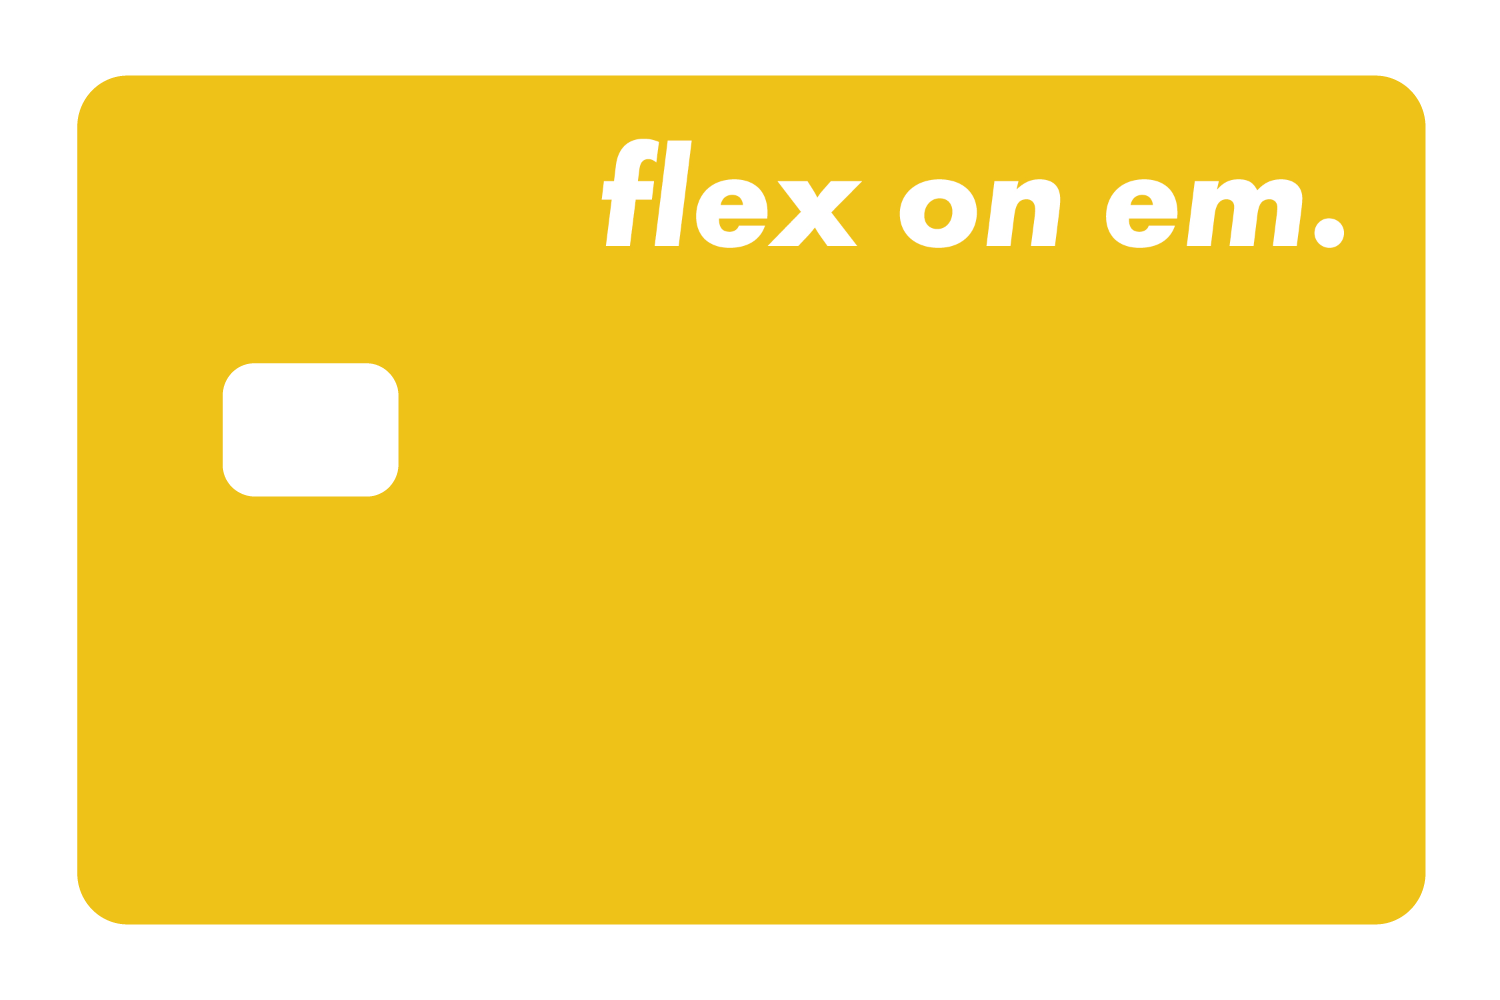 Flex on 'em